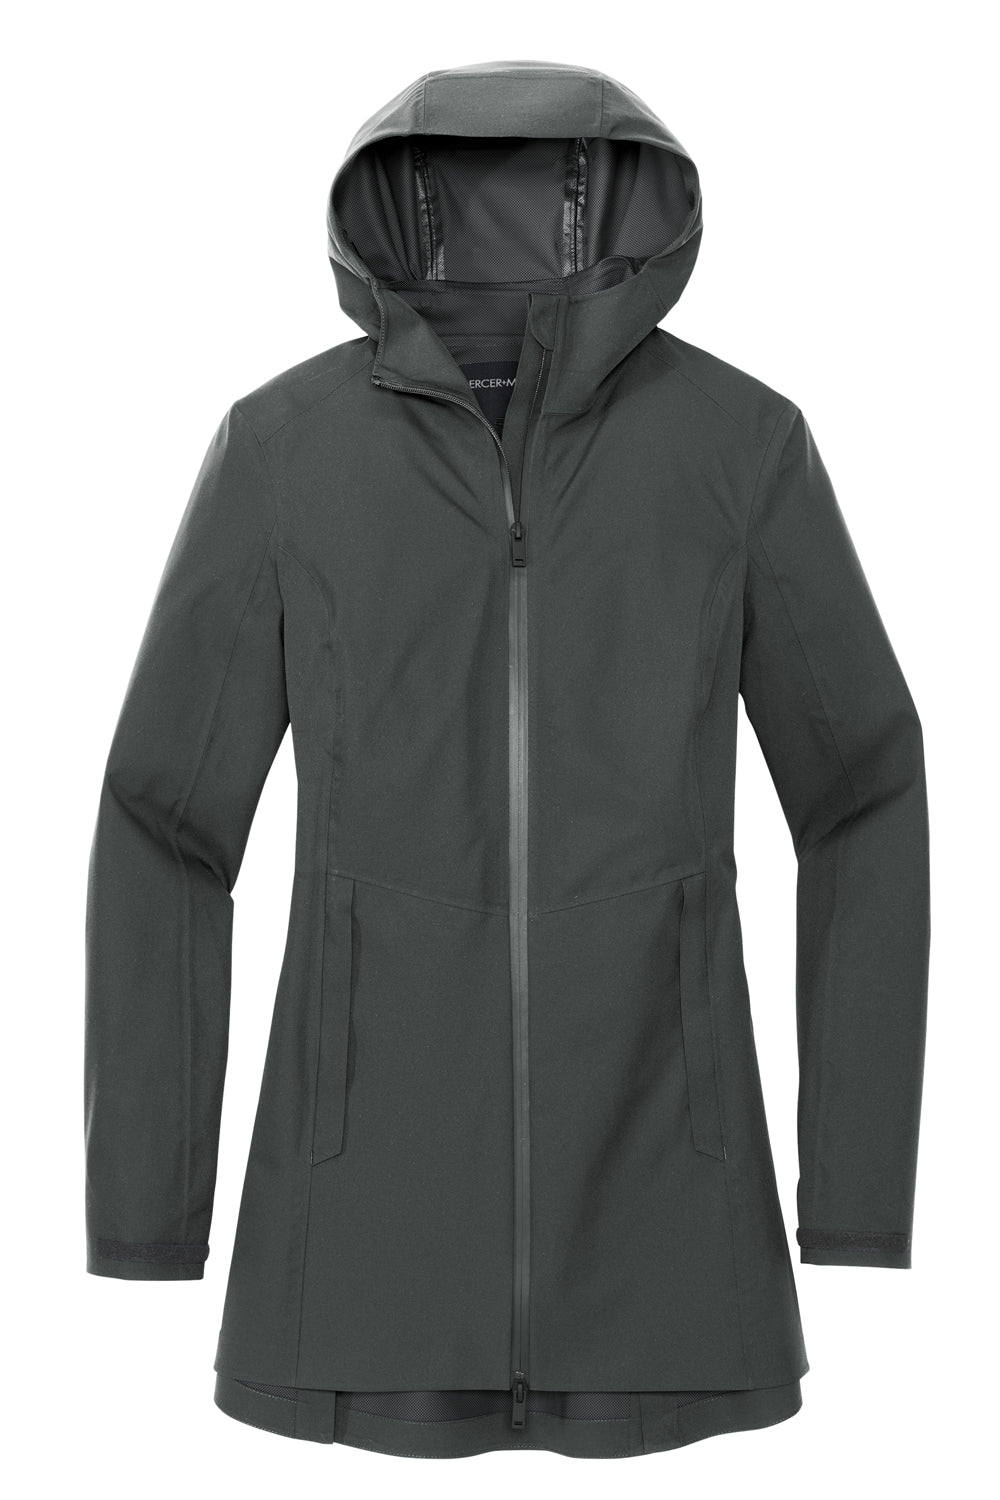 Mercer+Mettle MM7001 Waterproof Full Zip Hooded Rain Jacket Anchor Grey Flat Front